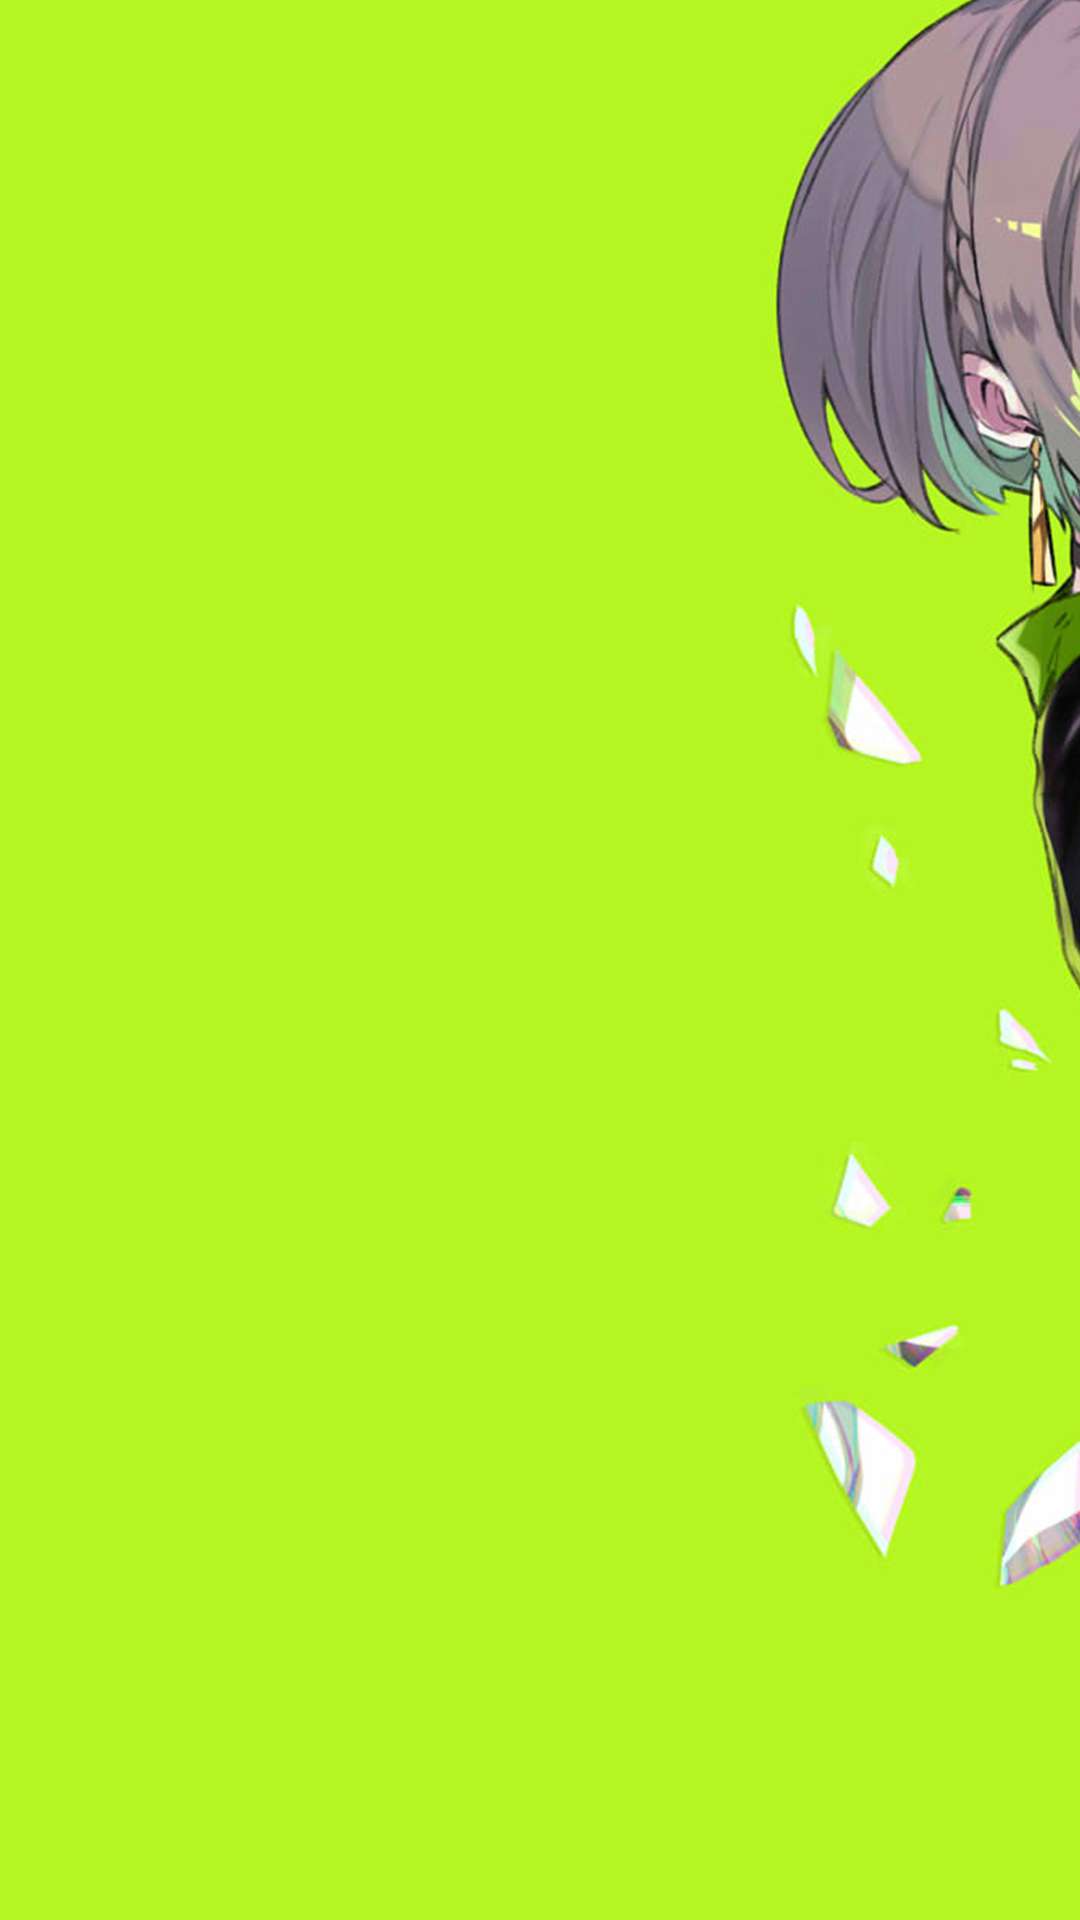 Owari no Seraph Series anime Character sword green eyes wallpaper   1920x1080  1008277  WallpaperUP